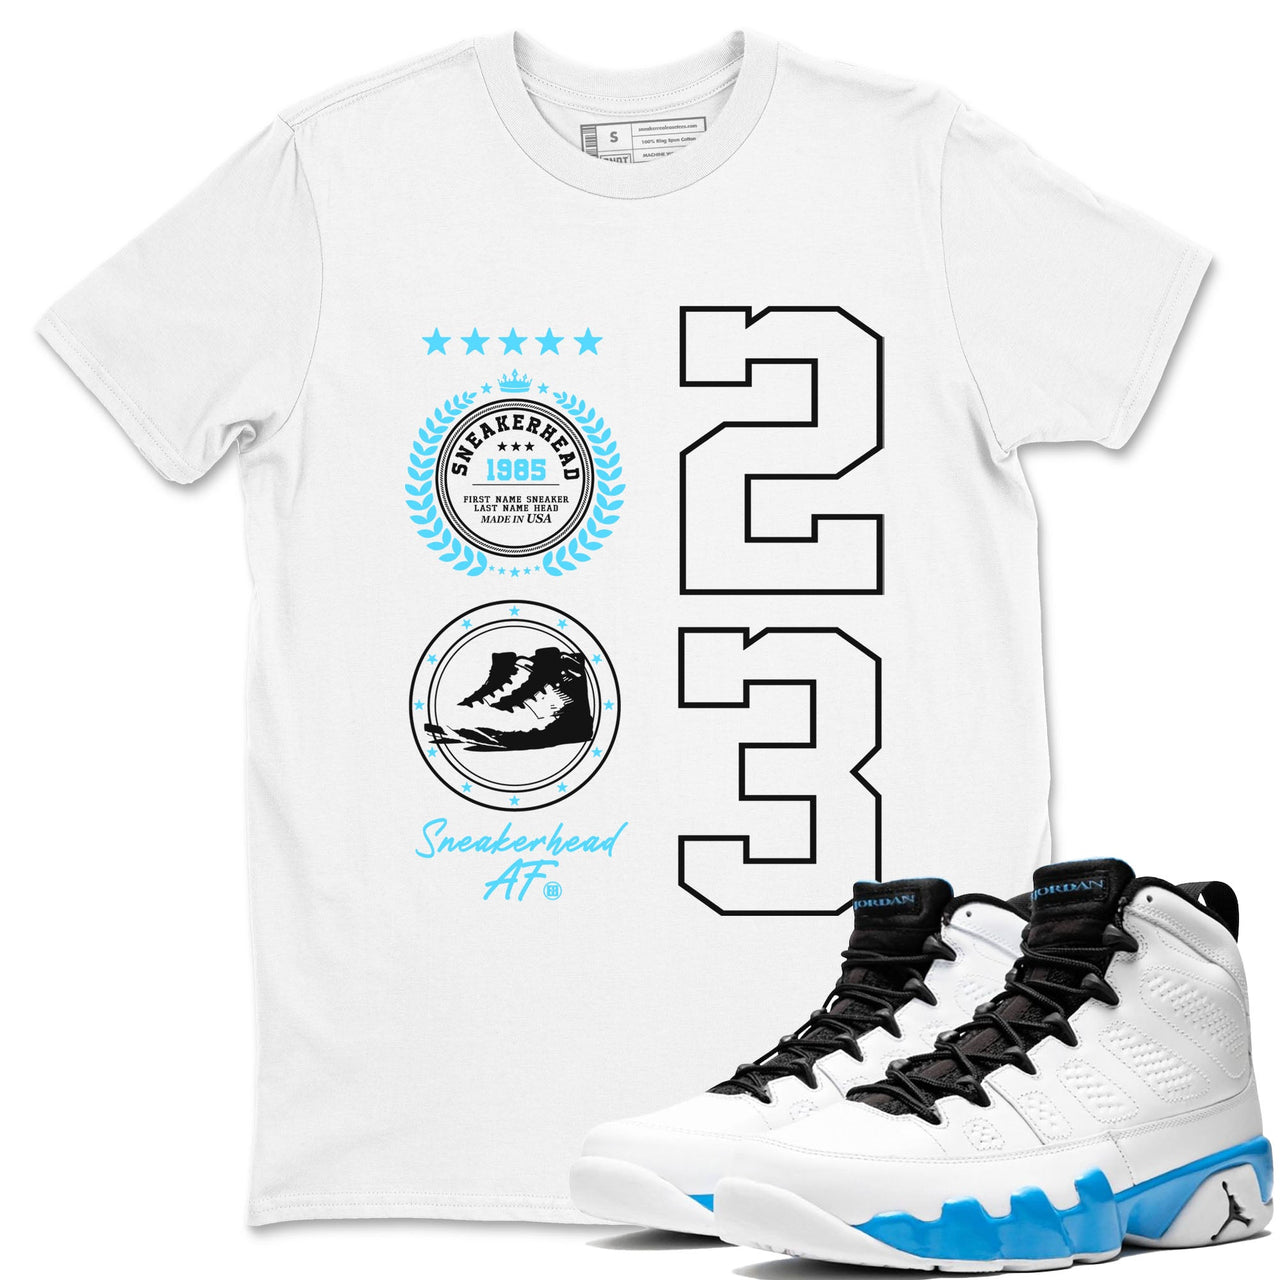 9s Powder Blue shirt to match jordans Sneaker Emblem sneaker tees Air Jordan 9 Powder Blue SNRT Sneaker Release Tees unisex cotton White 1 crew neck shirt